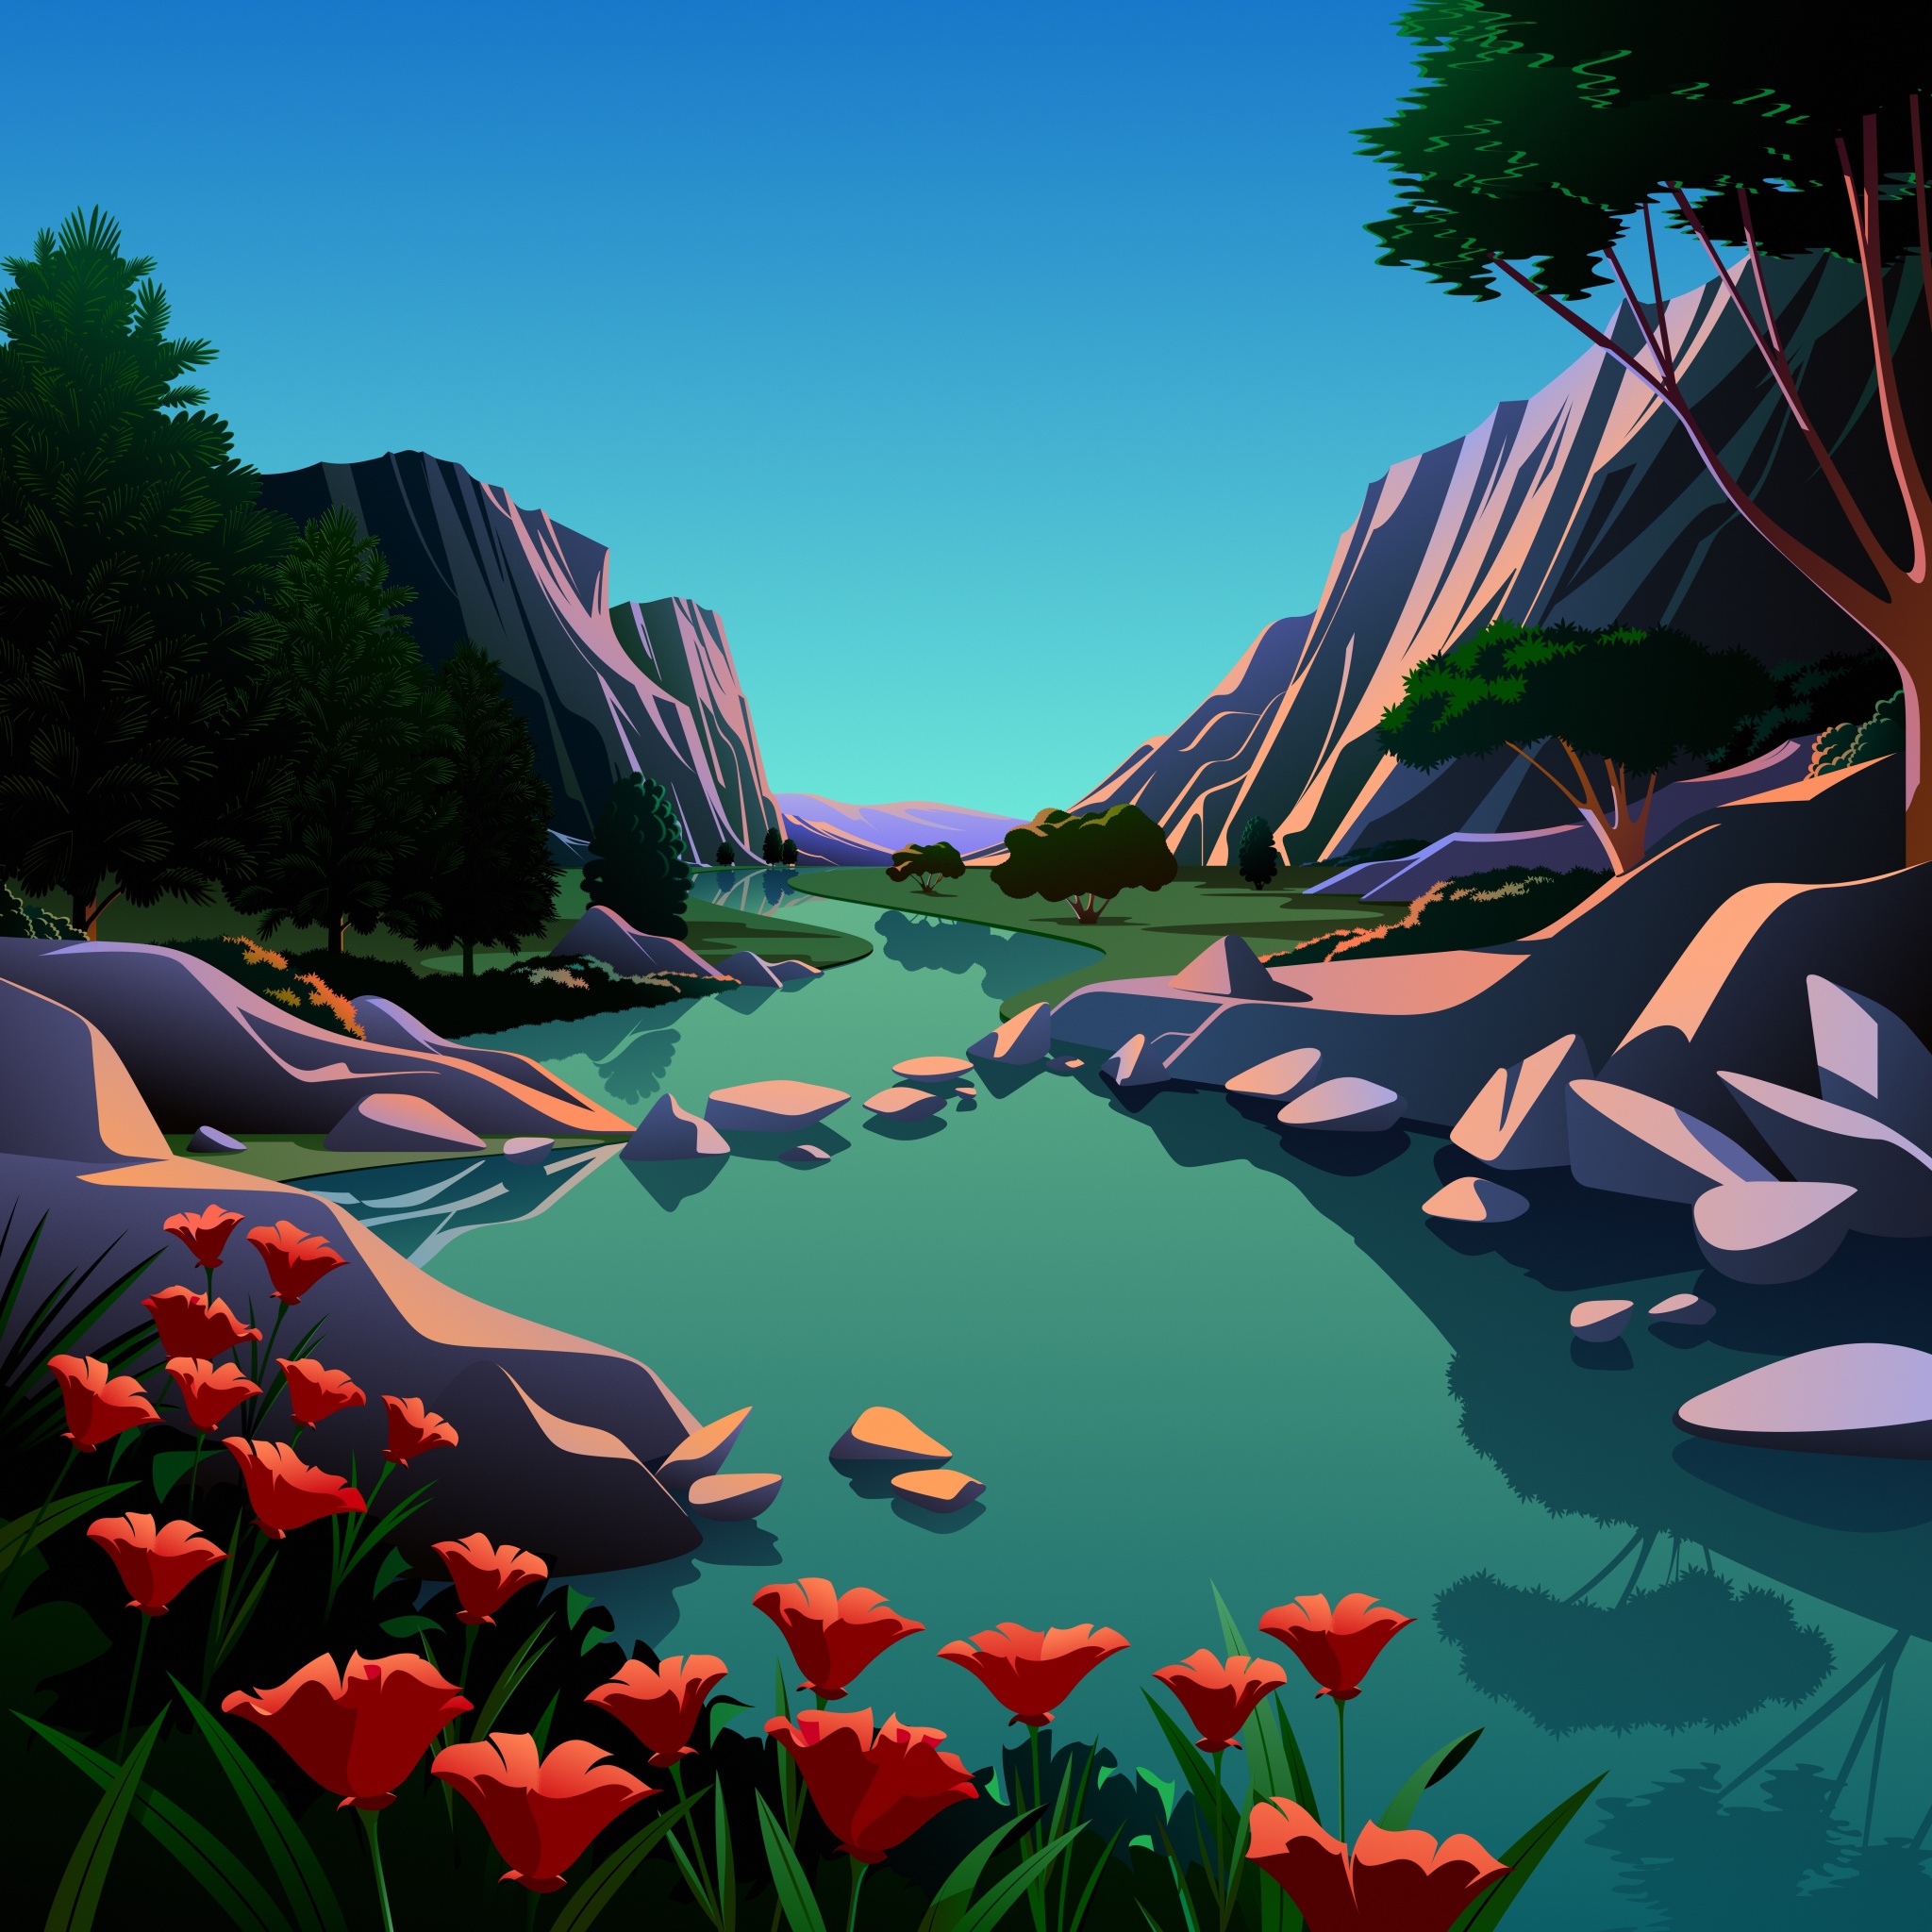 Lake Wallpaper 4K, Mountains, Rocks, Evening, Scenery, Illustration